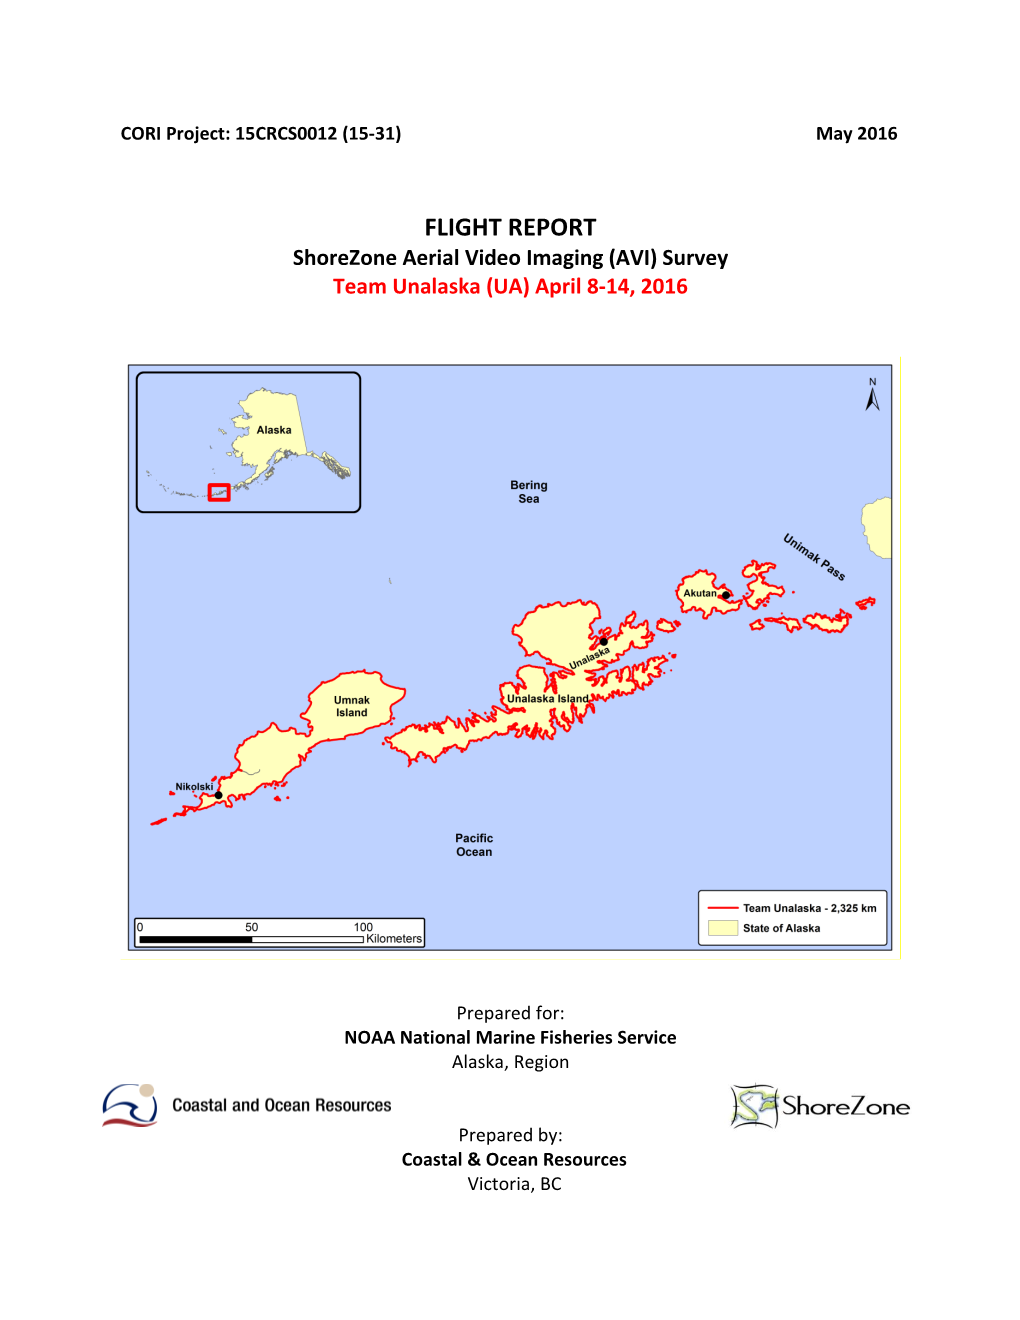 Shorezone Aerial Video Imaging (AVI) Survey Team Unalaska (UA) April 8-14, 2016